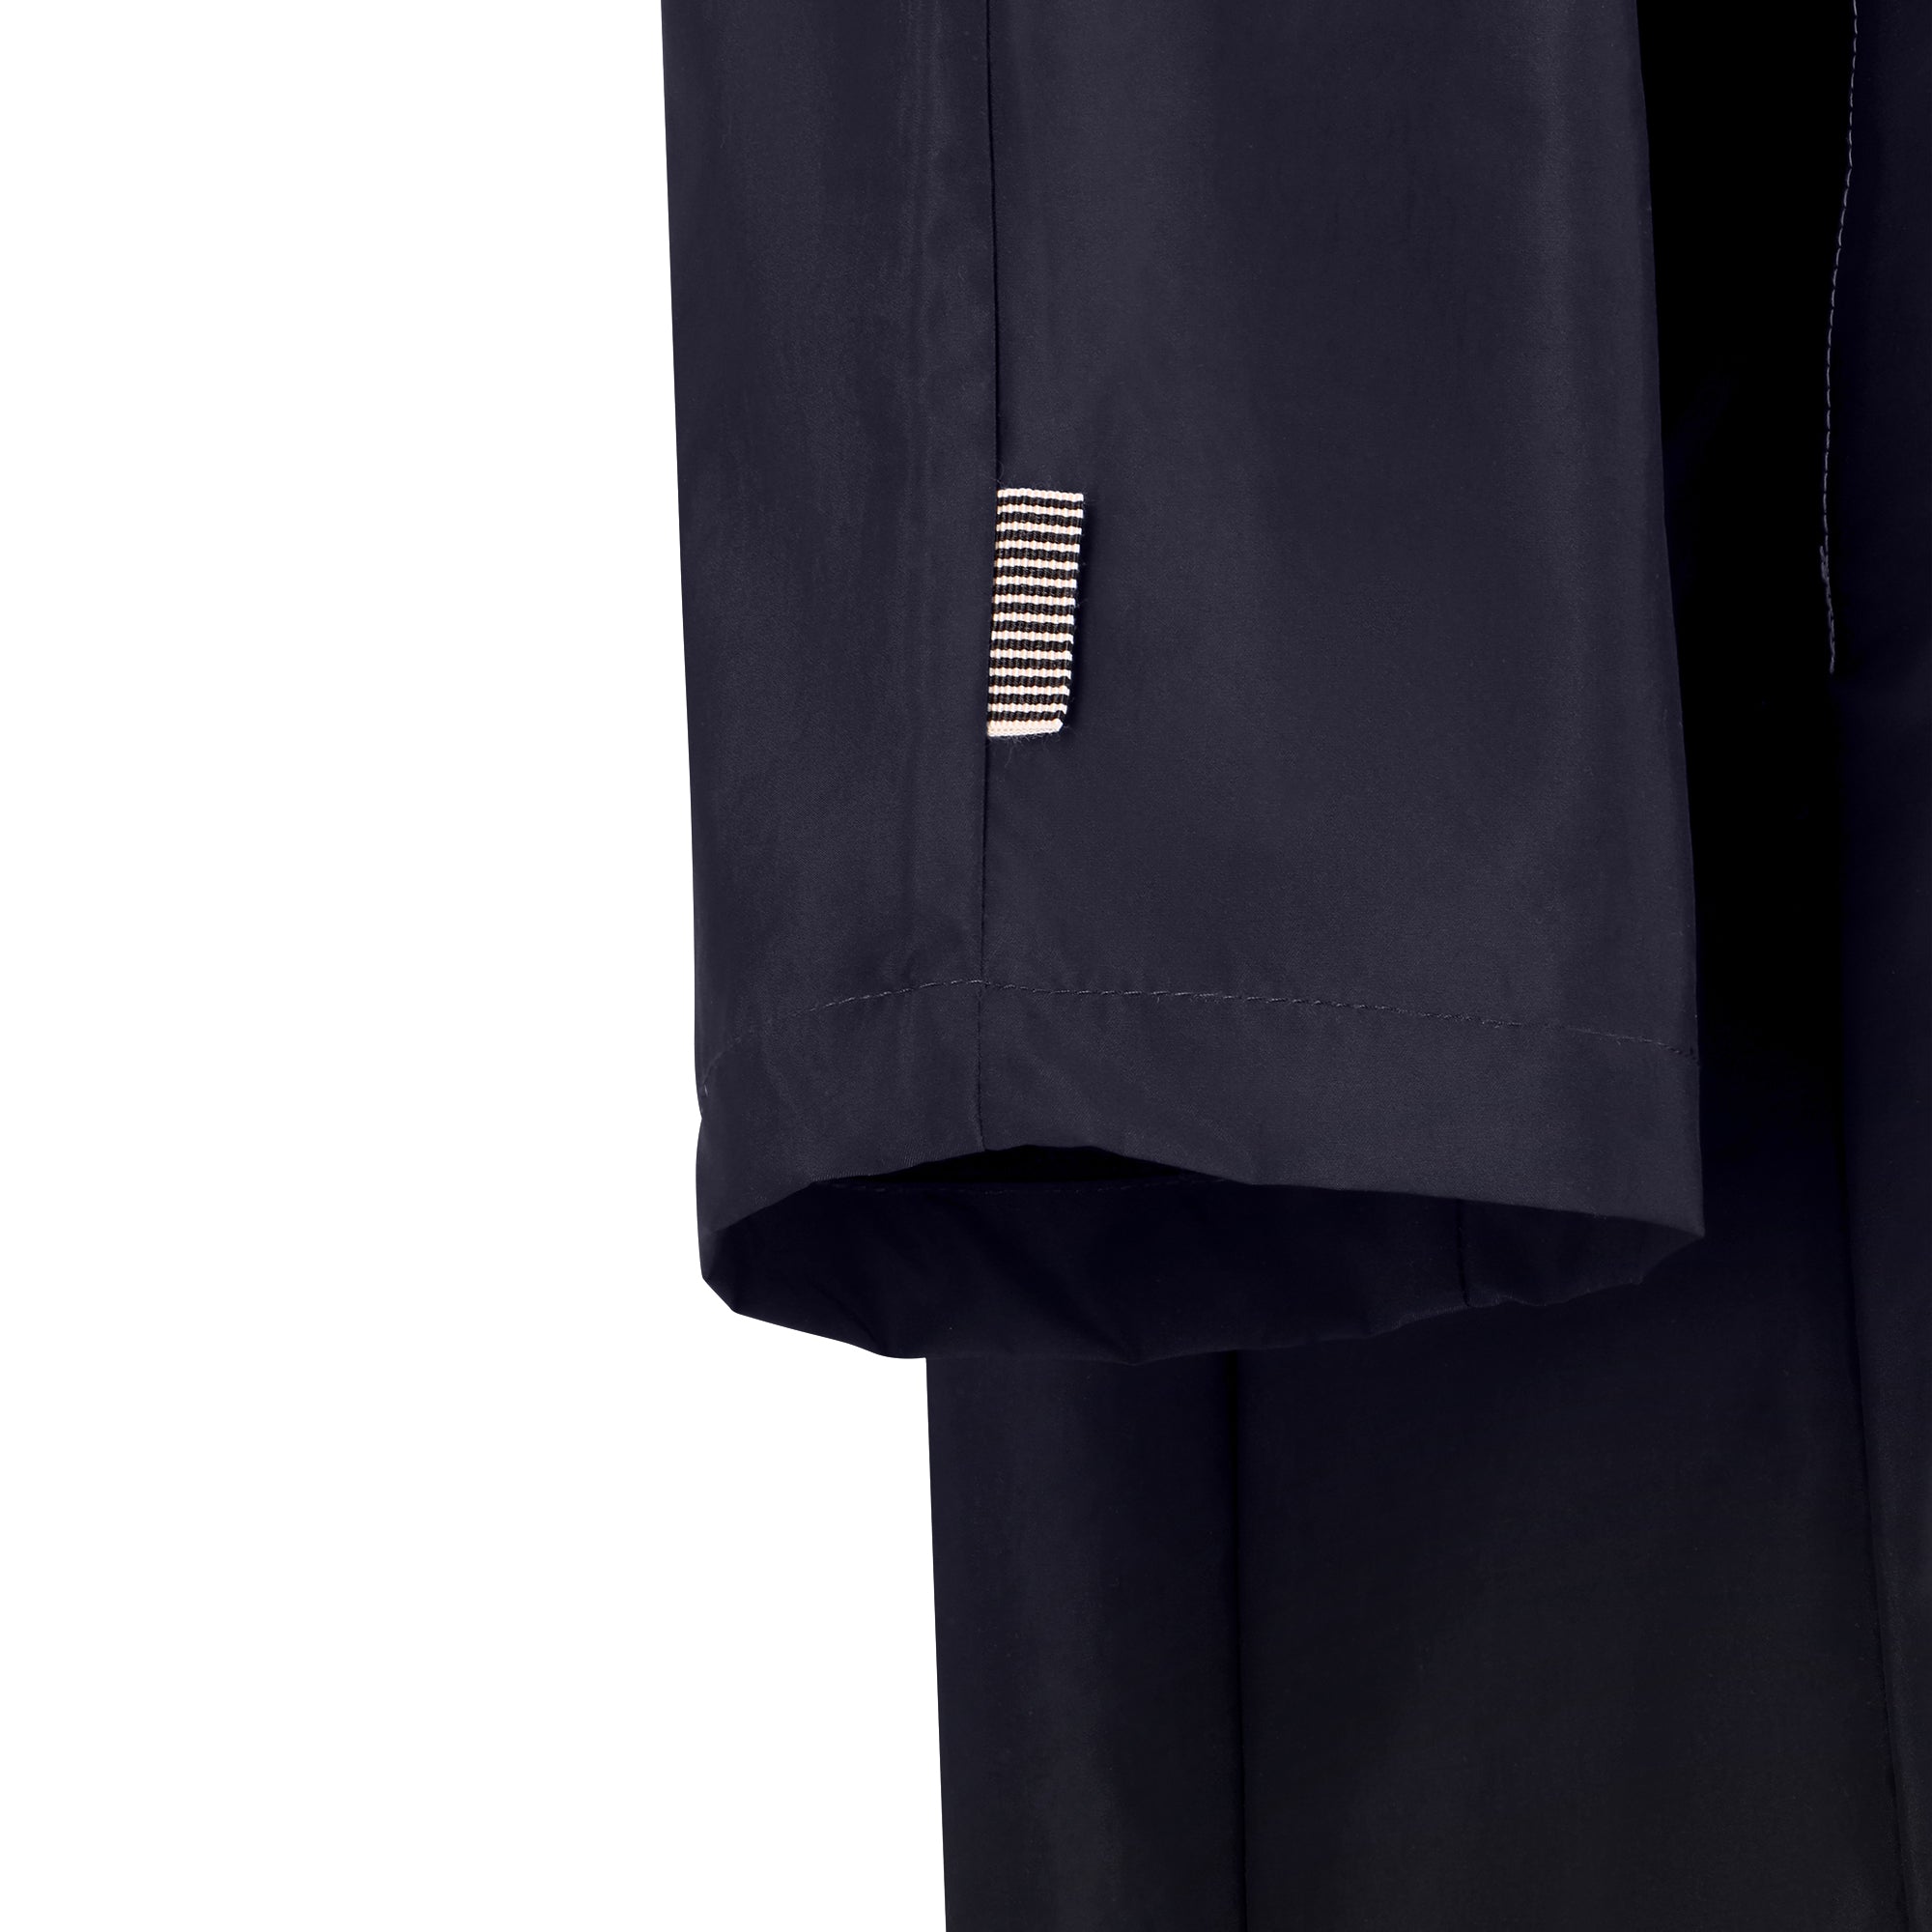 Mistral raincoat - Blue Night color - sleeve detail